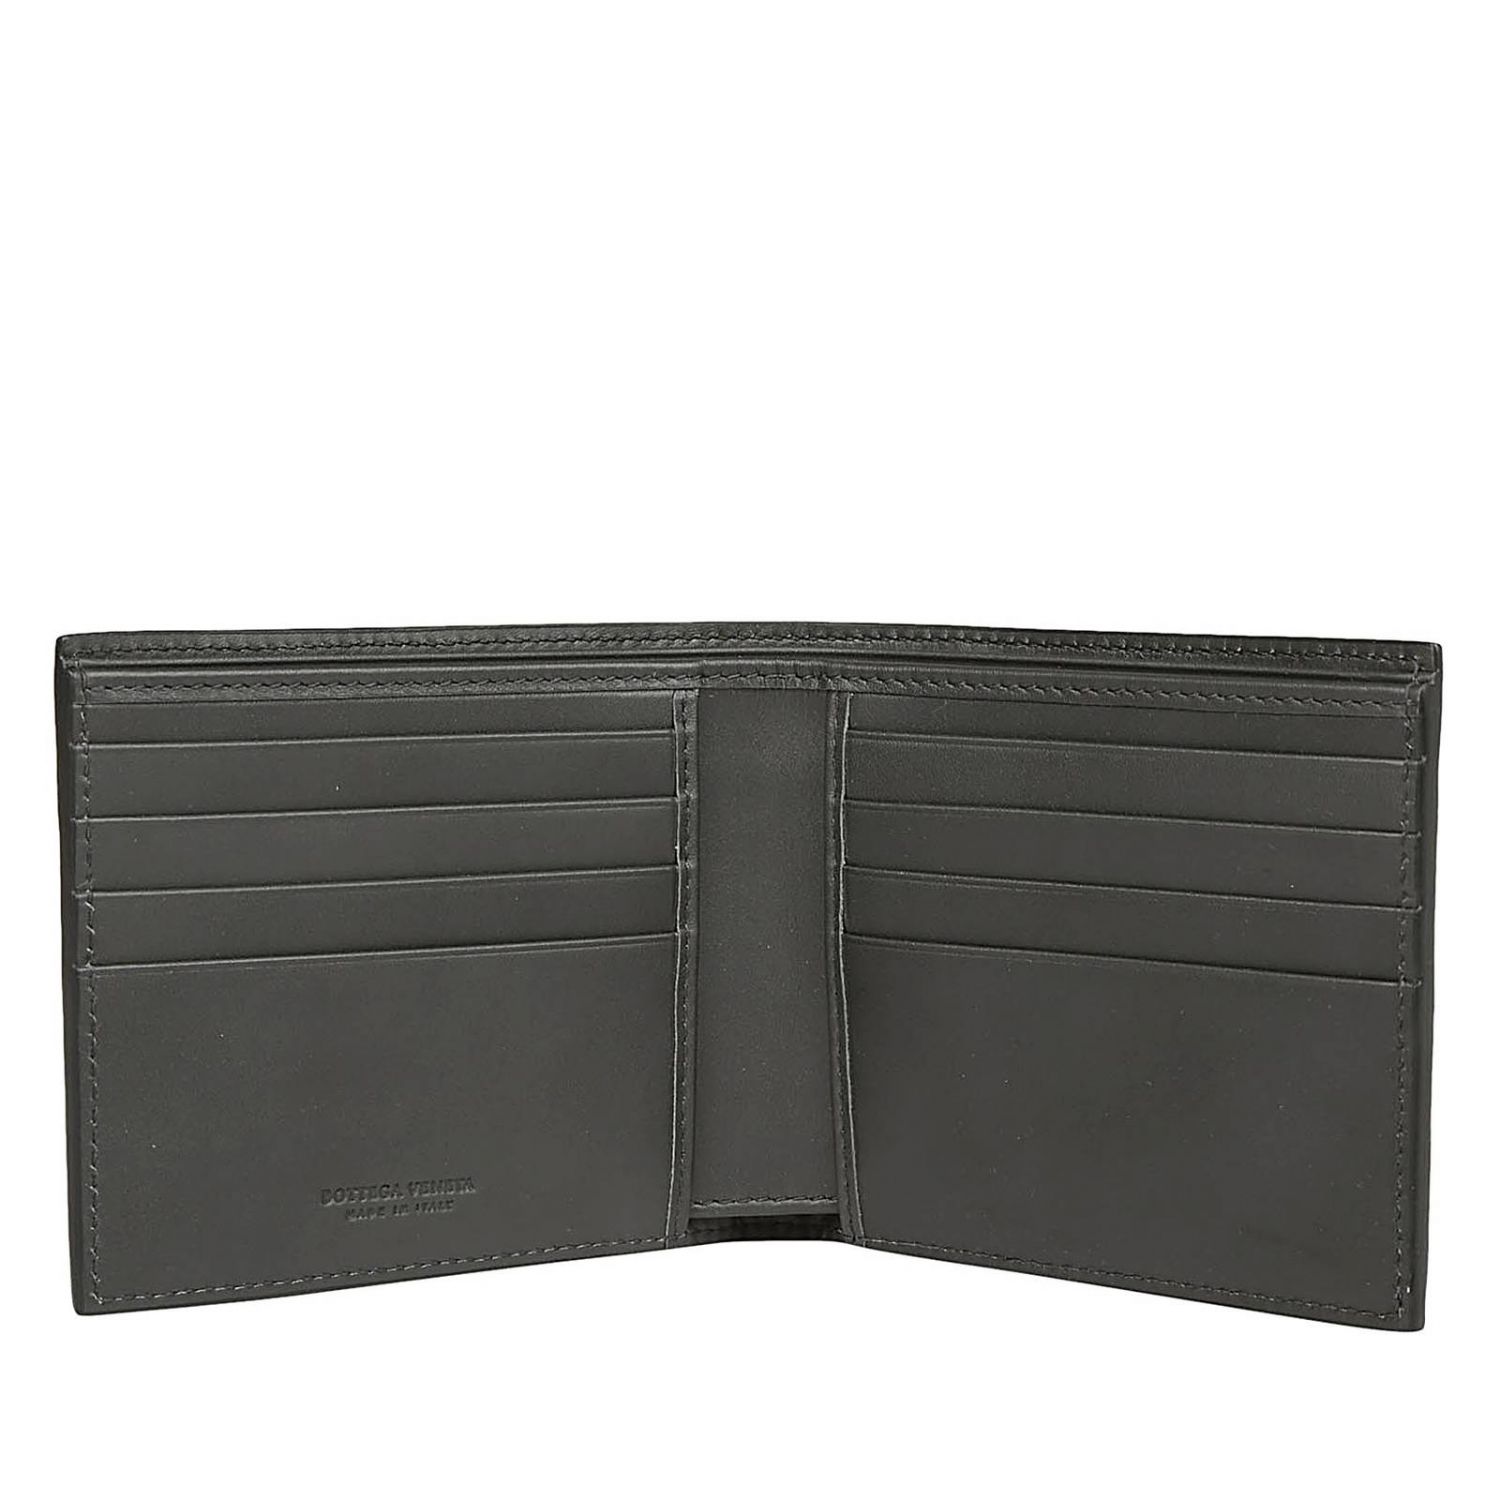 Wallet men Bottega Veneta | Wallet Bottega Veneta Men Charcoal | Wallet ...